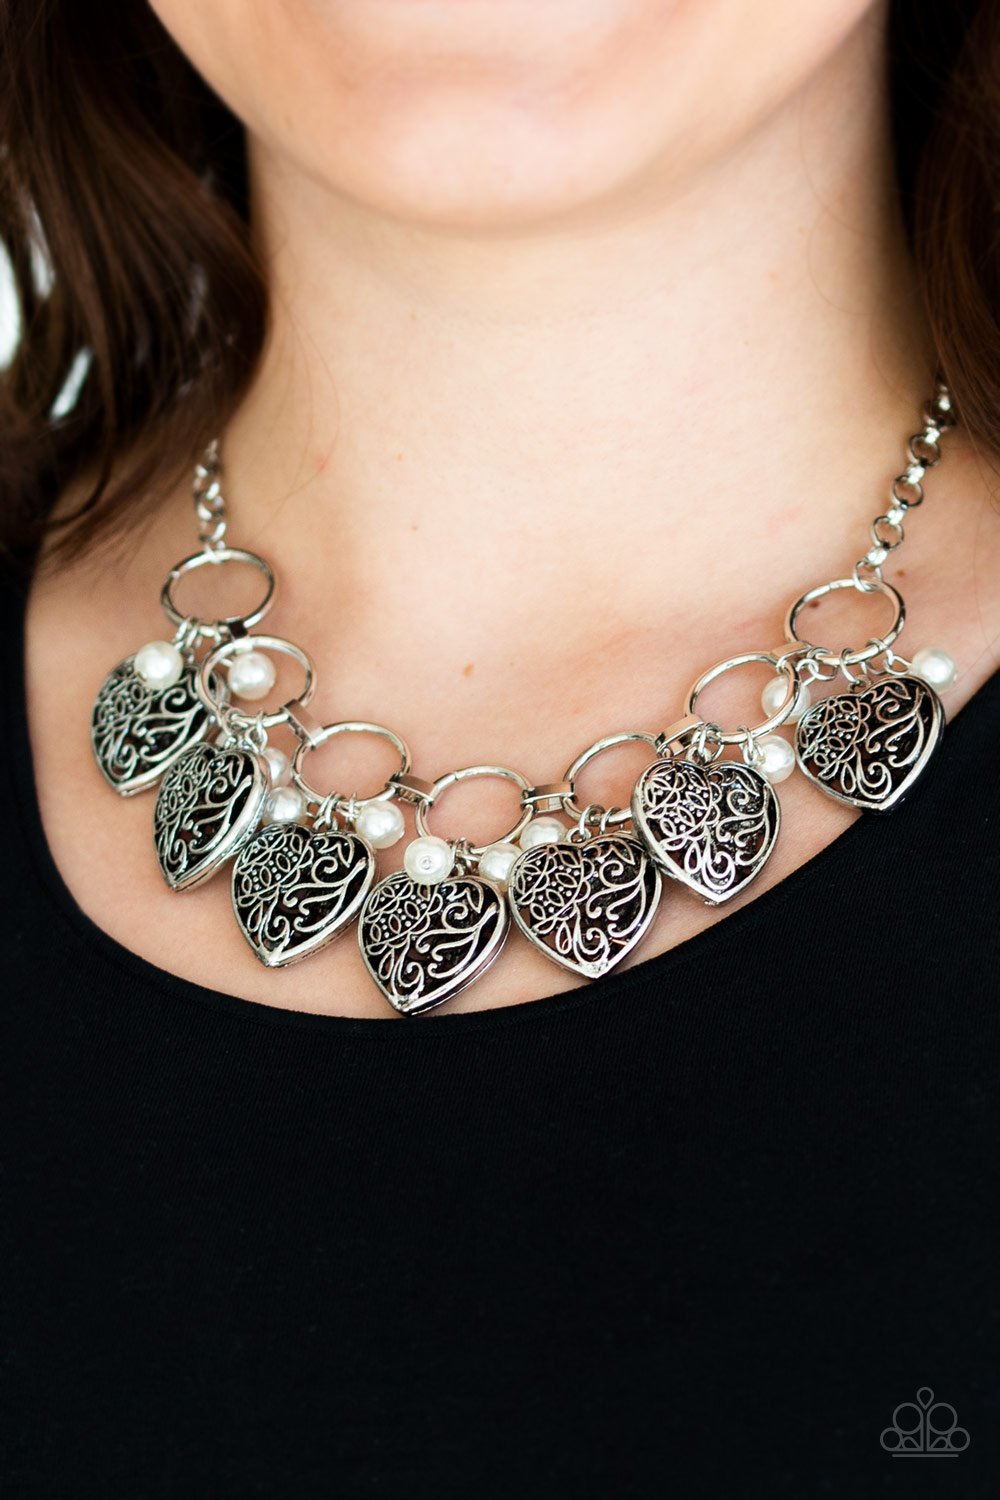 Paparazzi Accessories - Very Valentine #N653 Peg- White Necklace